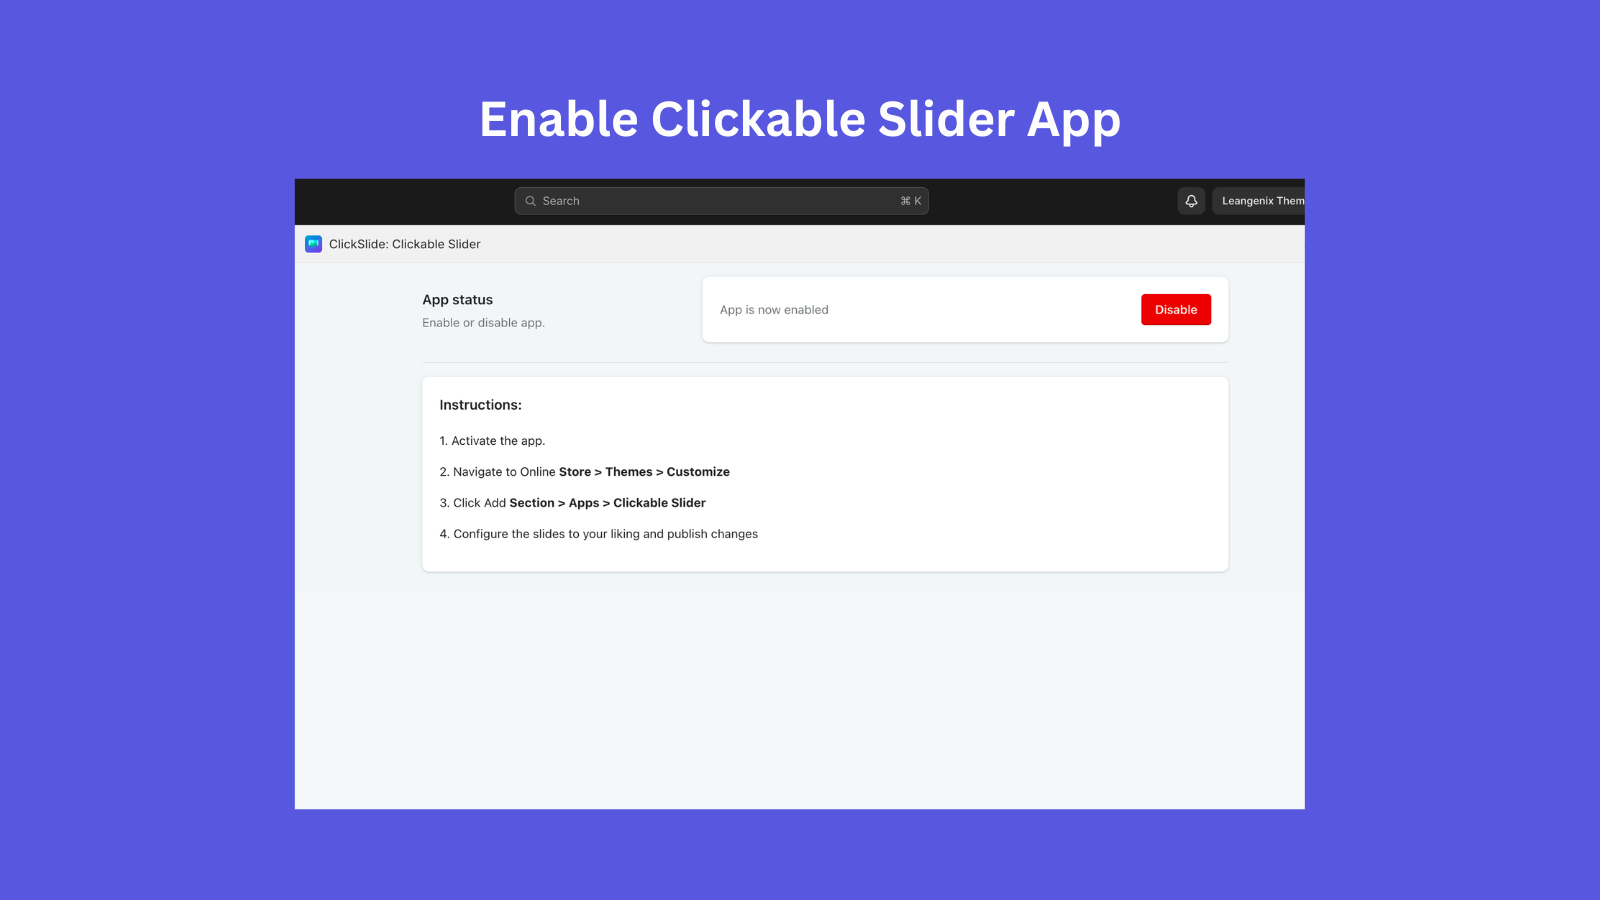 Enable clickable slider app